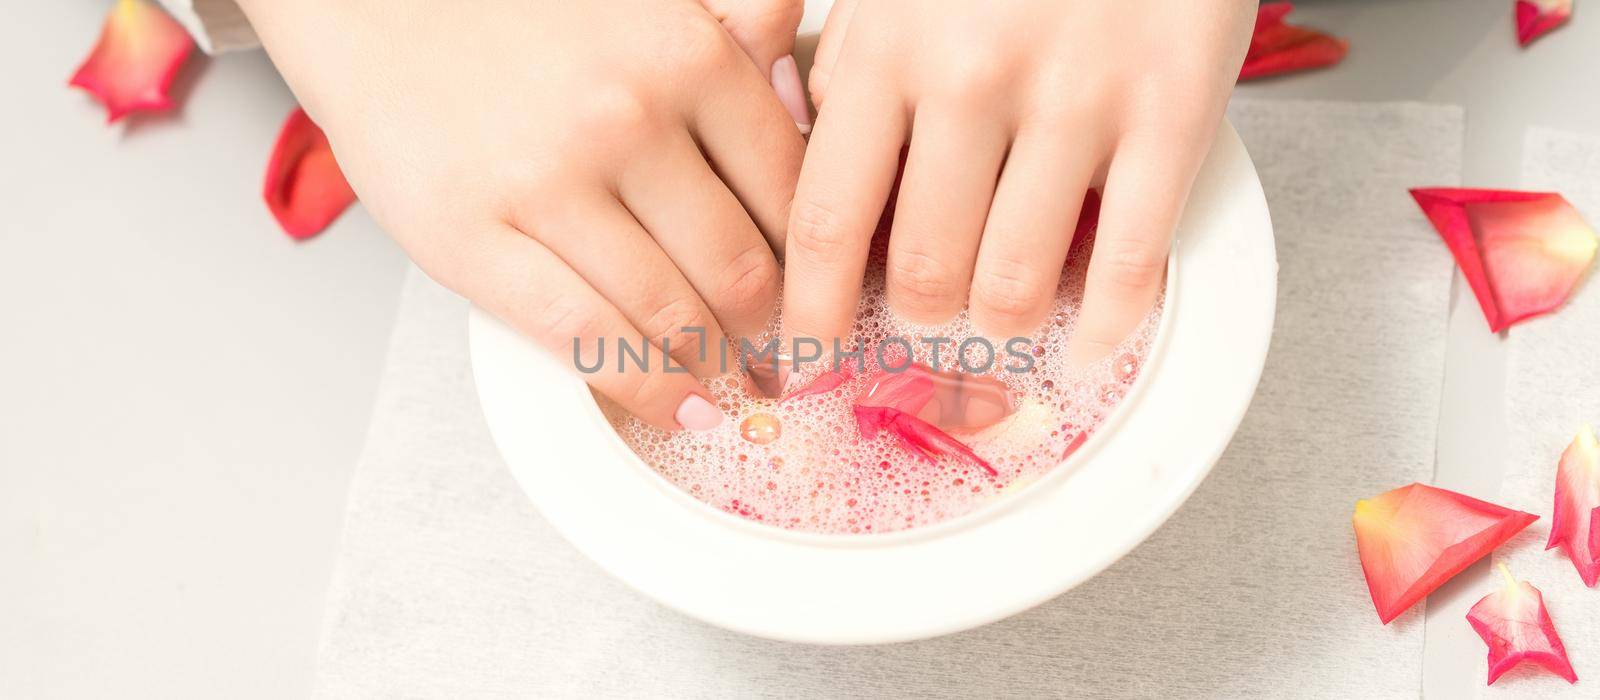 Female hands in bowl with rose petals by okskukuruza